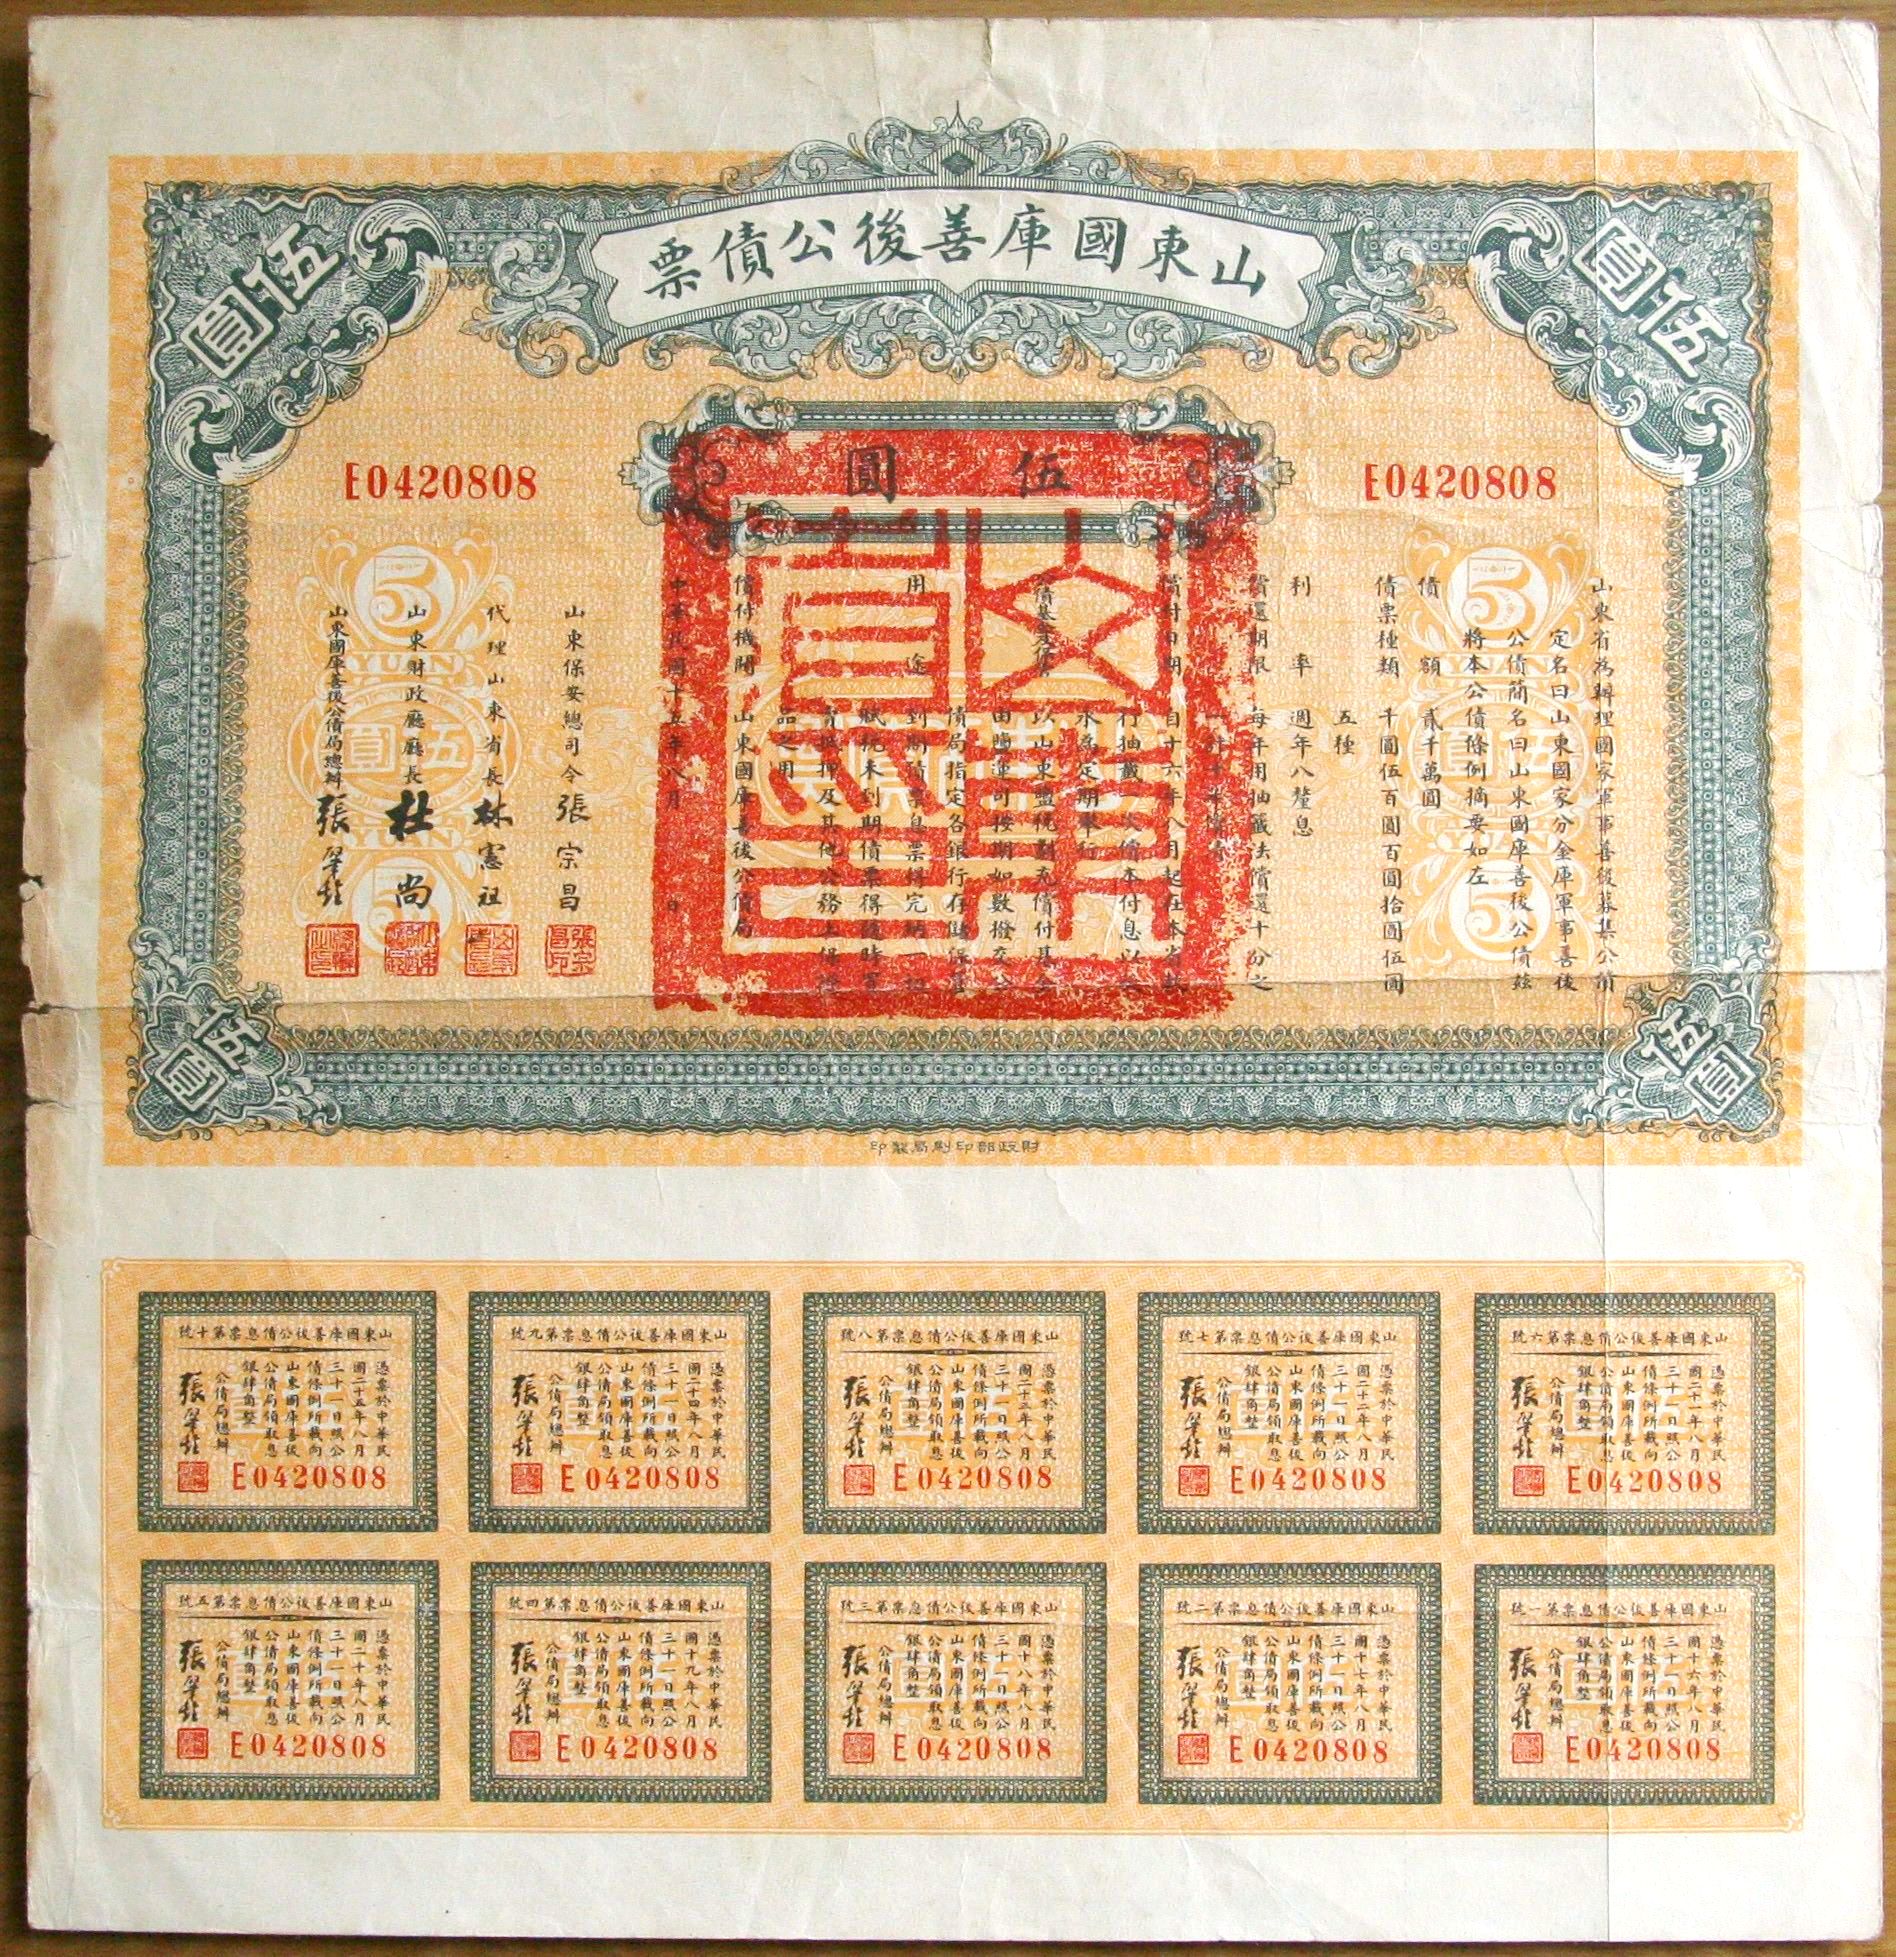 B2821, China 8% Shantung Province Rehabilitation Loan, 5 Dollars 1926